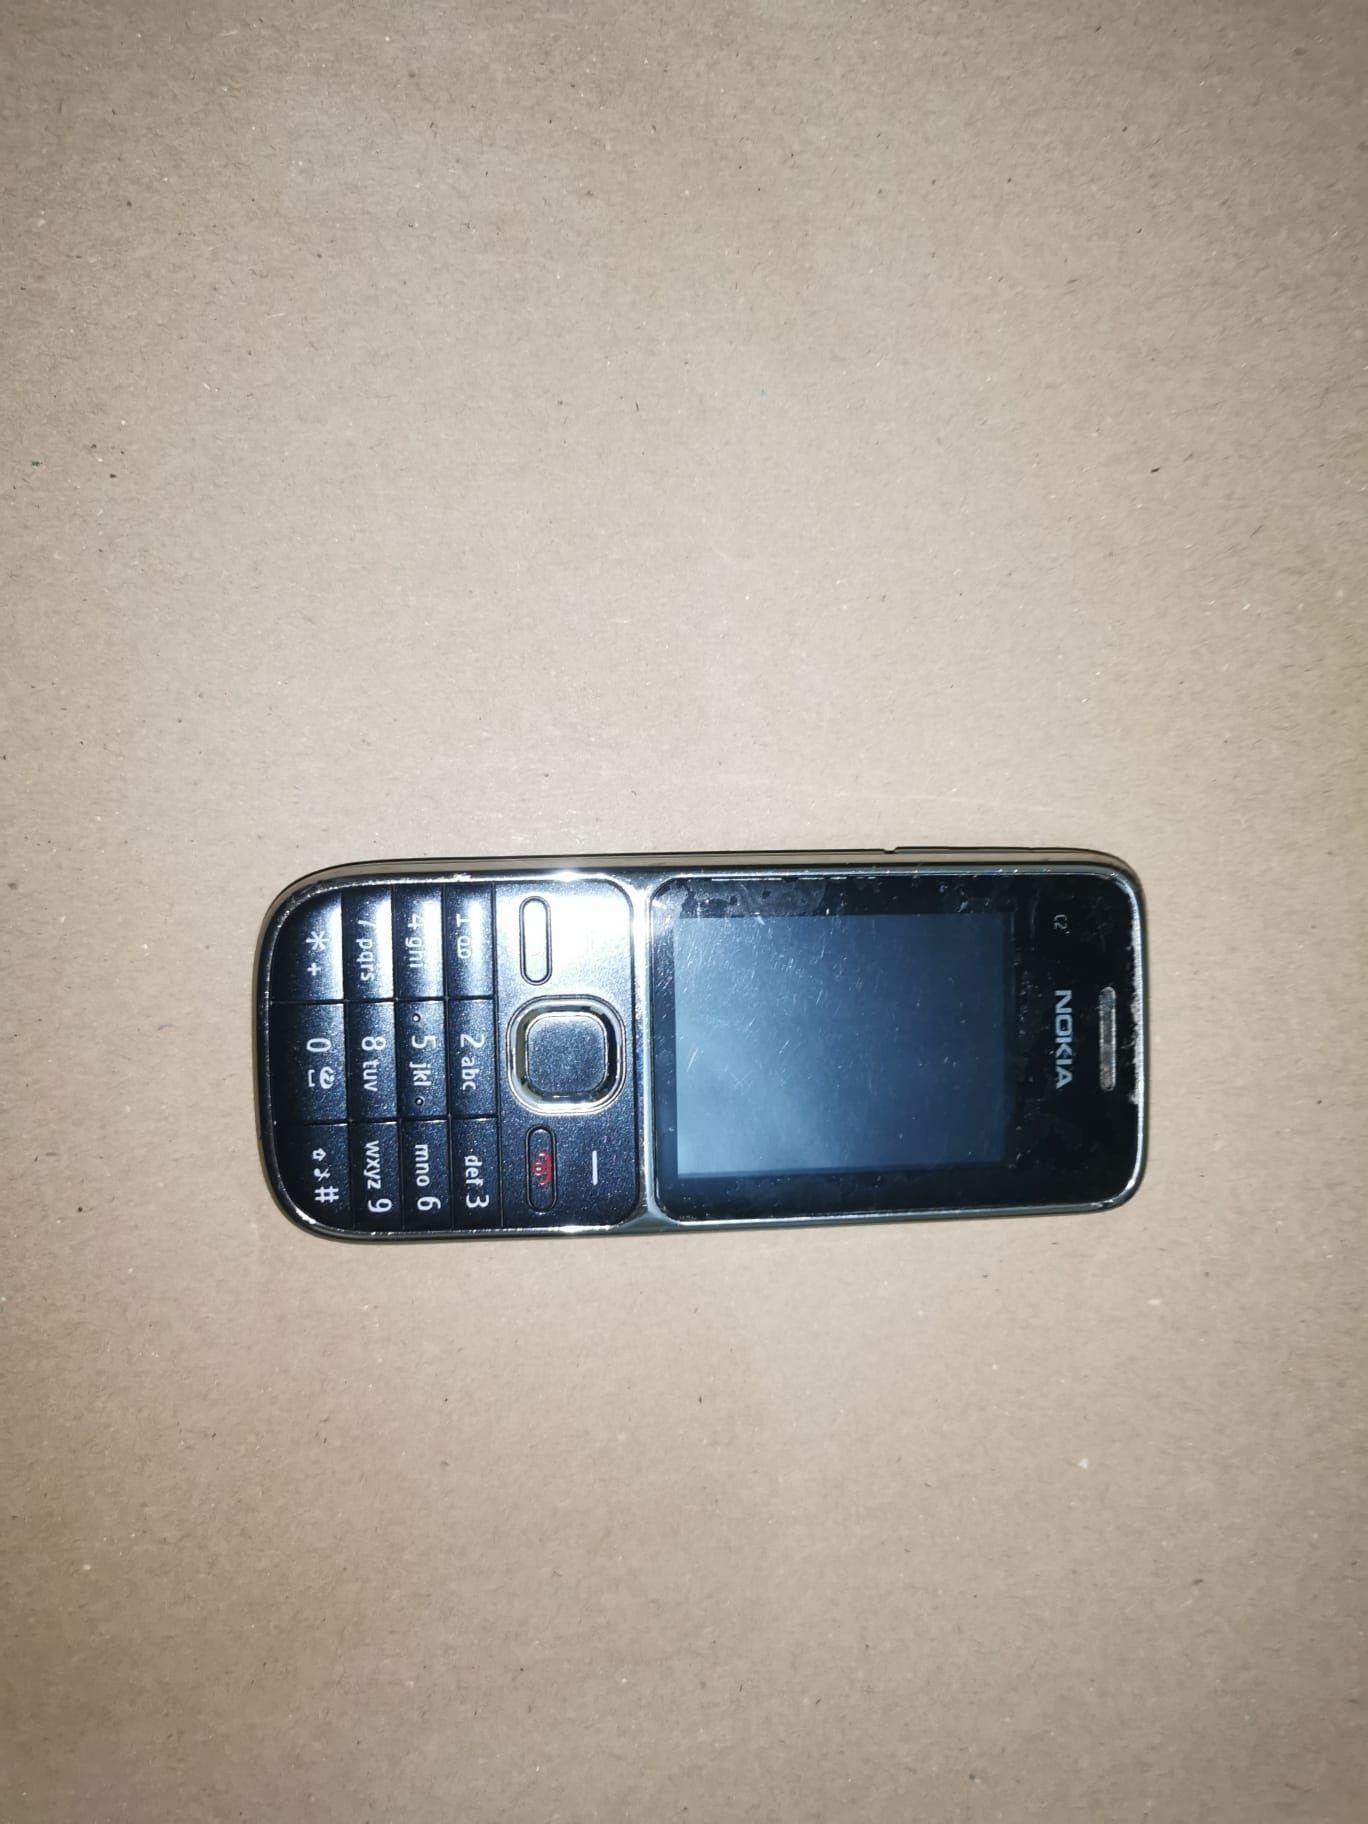 Telefonul Nokia C2-01